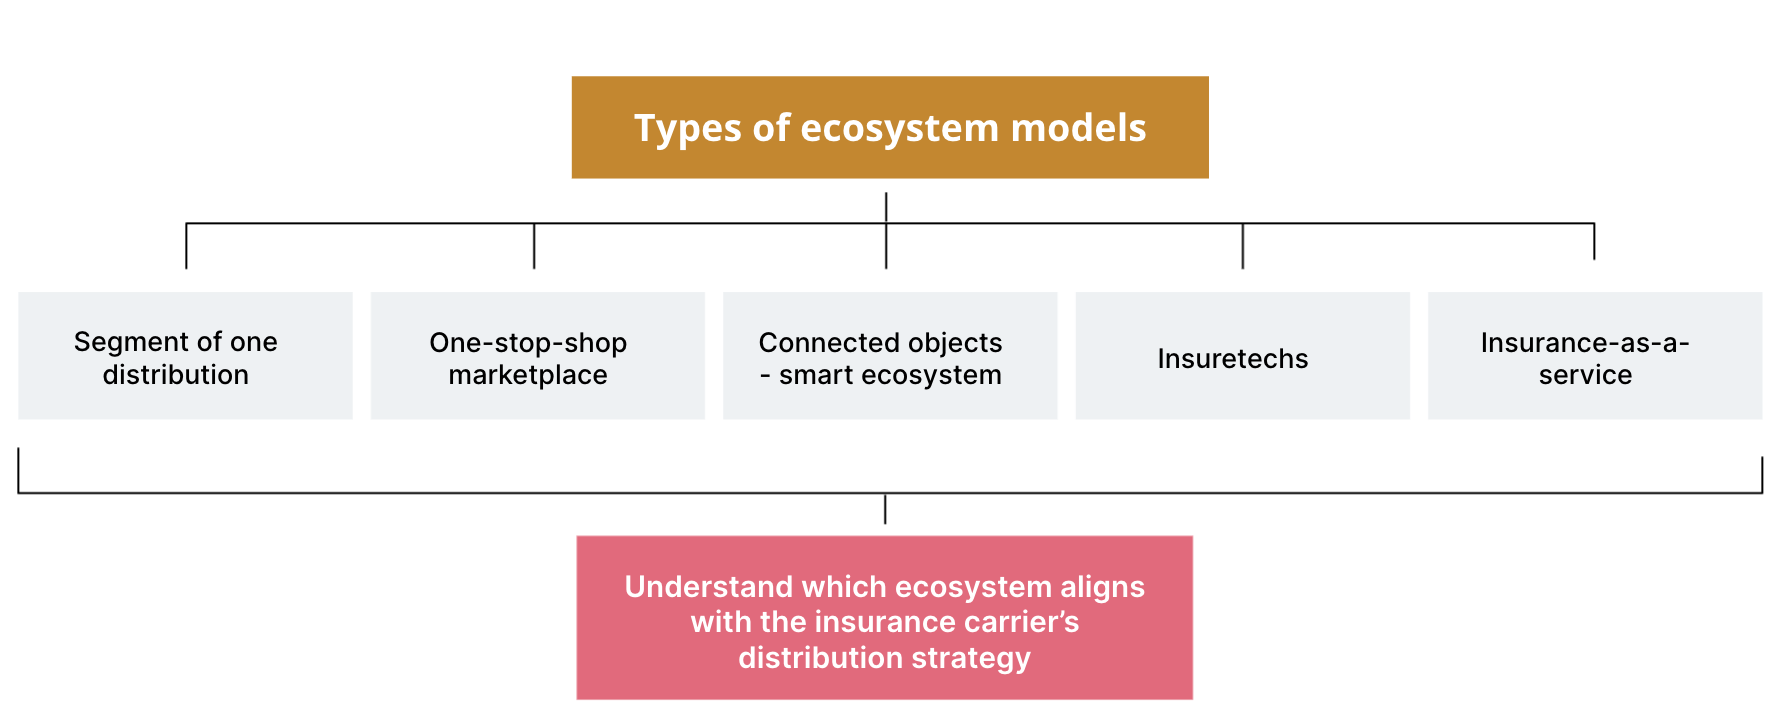 Types of ecosystem models